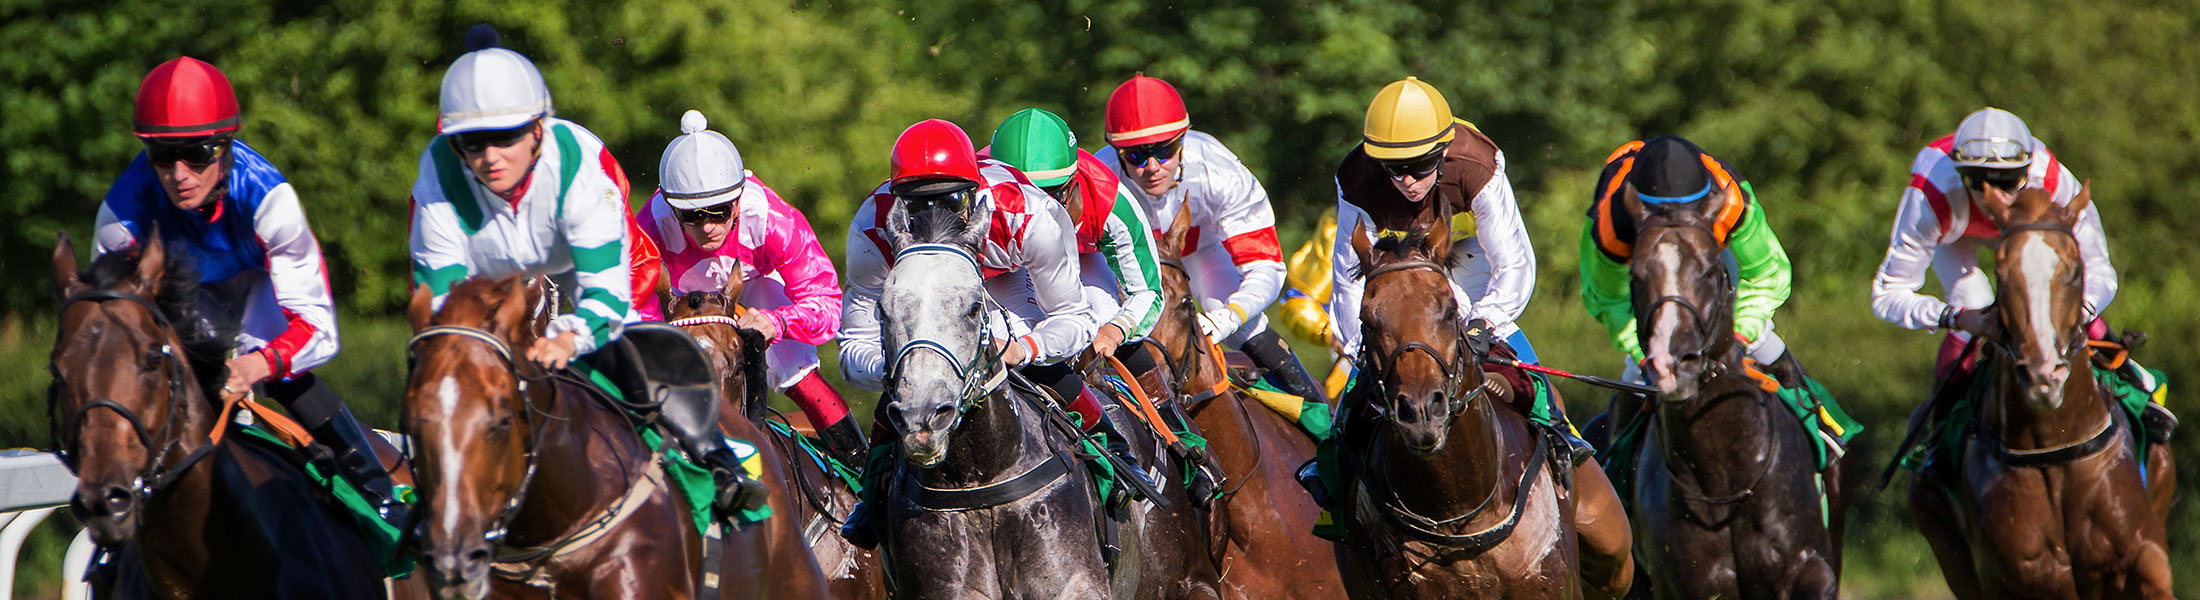 Photo of horses and jockeys racing